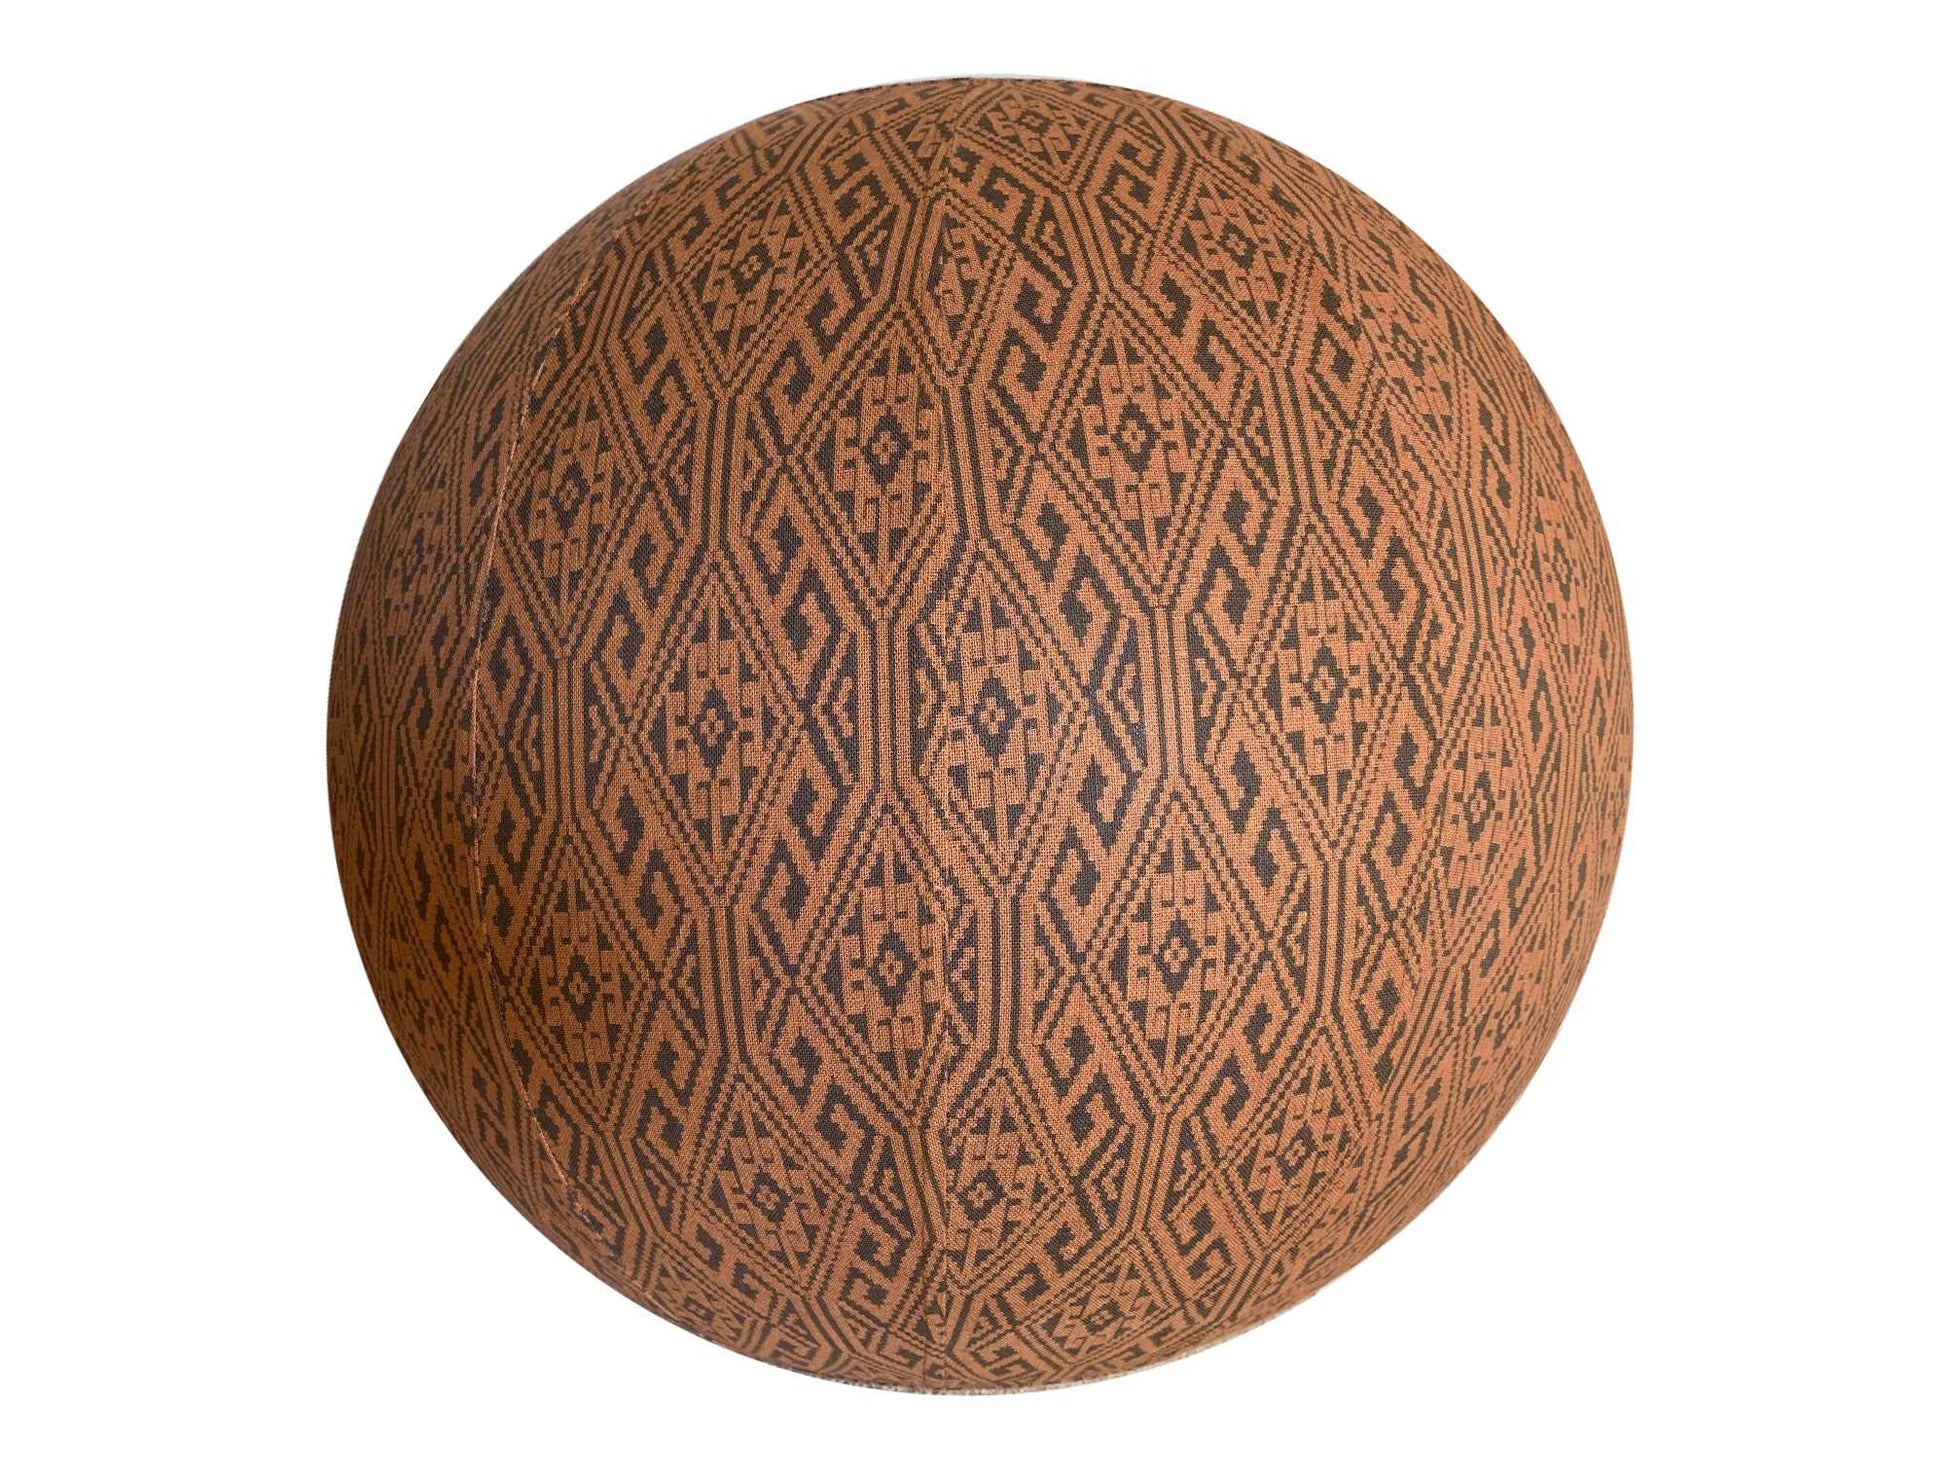 75cm Balance Ball / Yoga Ball Cover: Clay Aztec